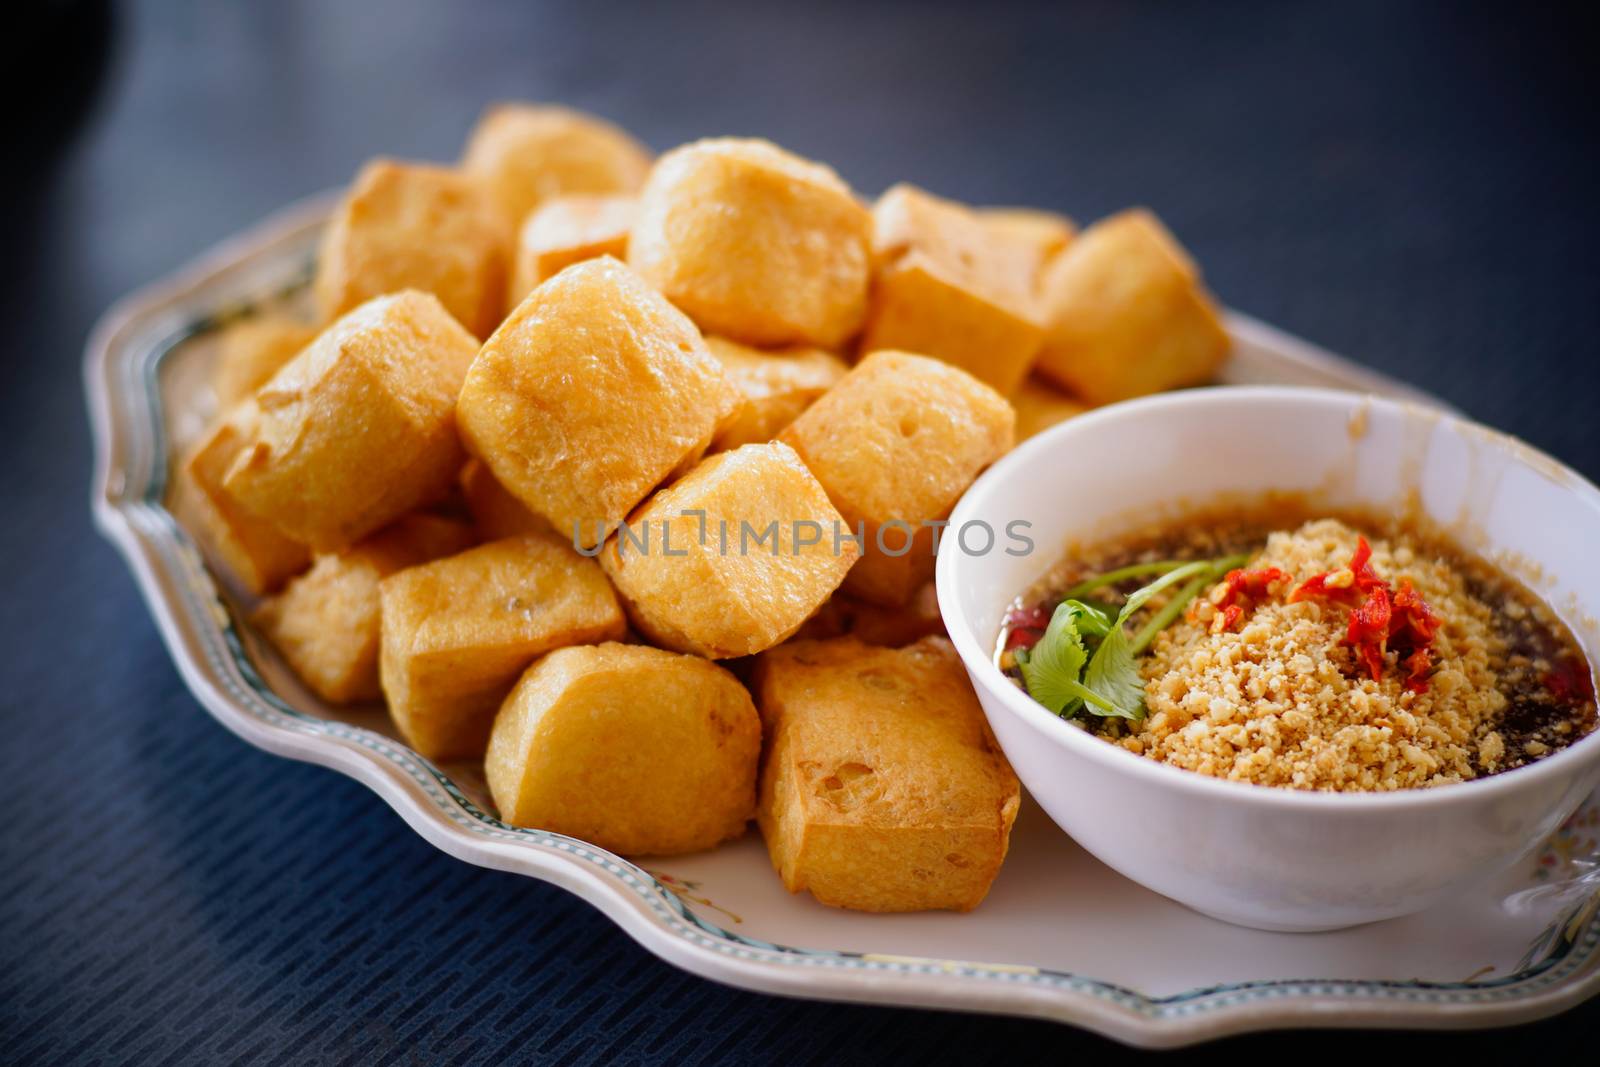 fried tofu by antpkr